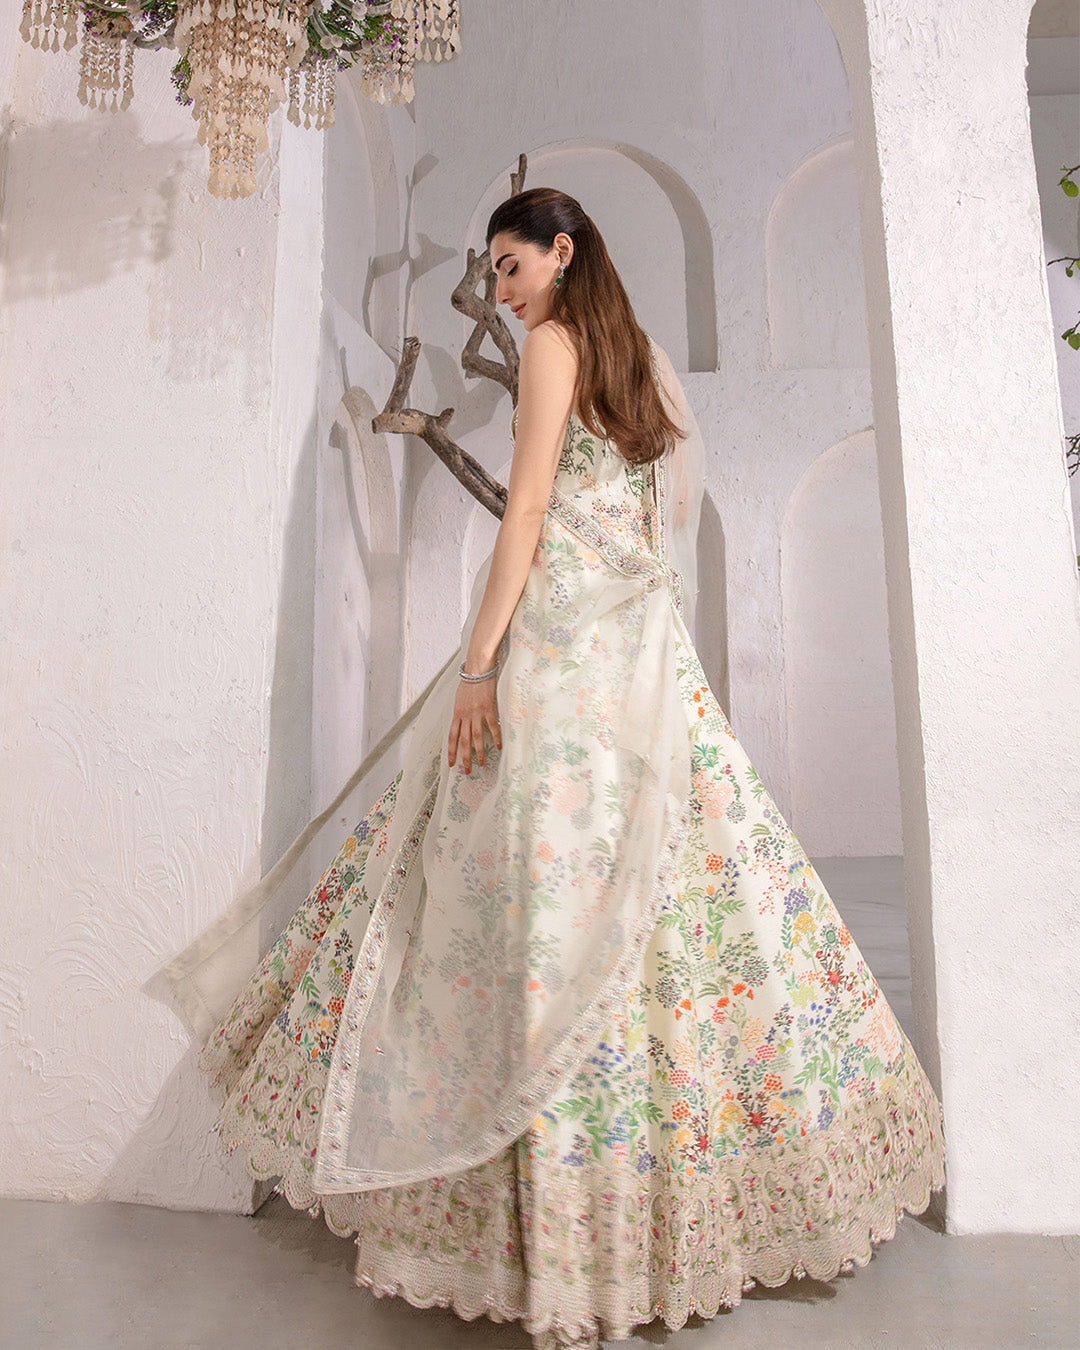 Faiza Saqlain | Lenora Luxury Pret | Floretta - Khanumjan  Pakistani Clothes and Designer Dresses in UK, USA 